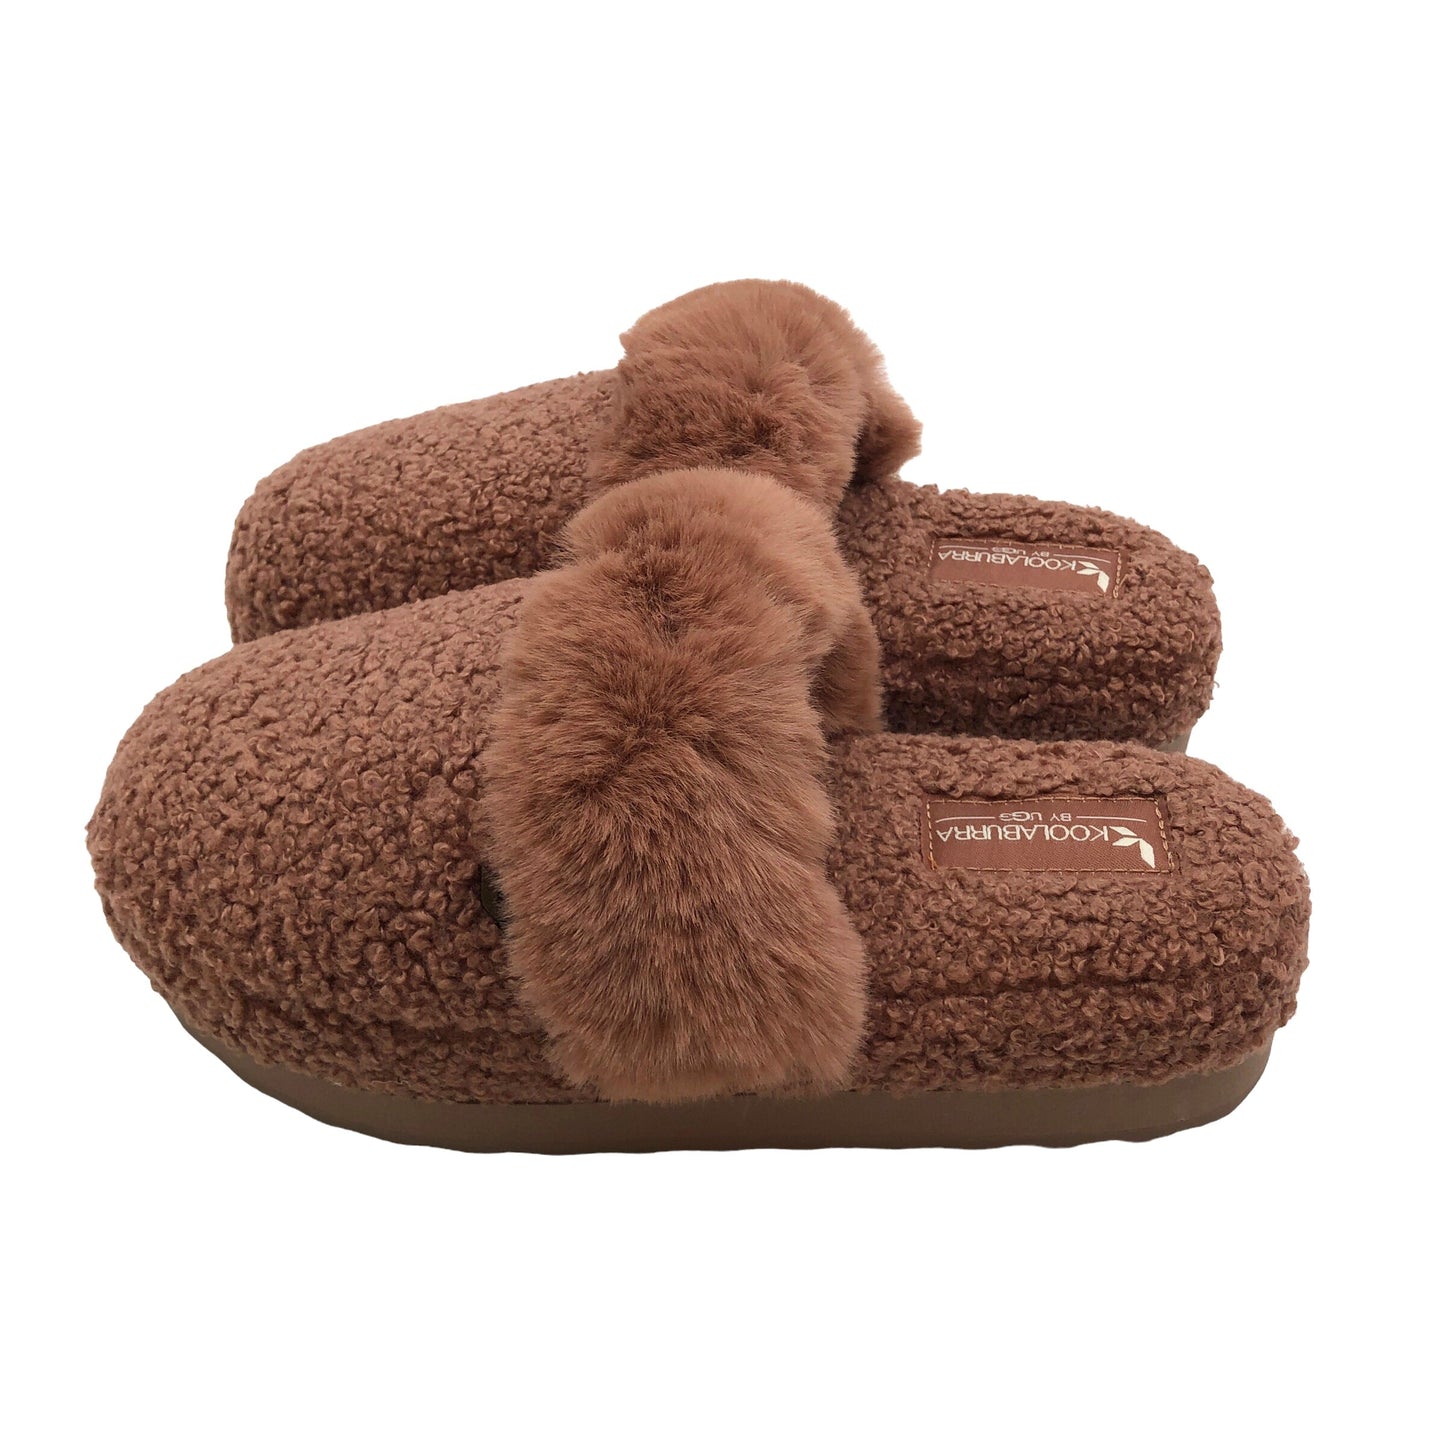 Brown Slippers Koolaburra By Ugg, Size 6